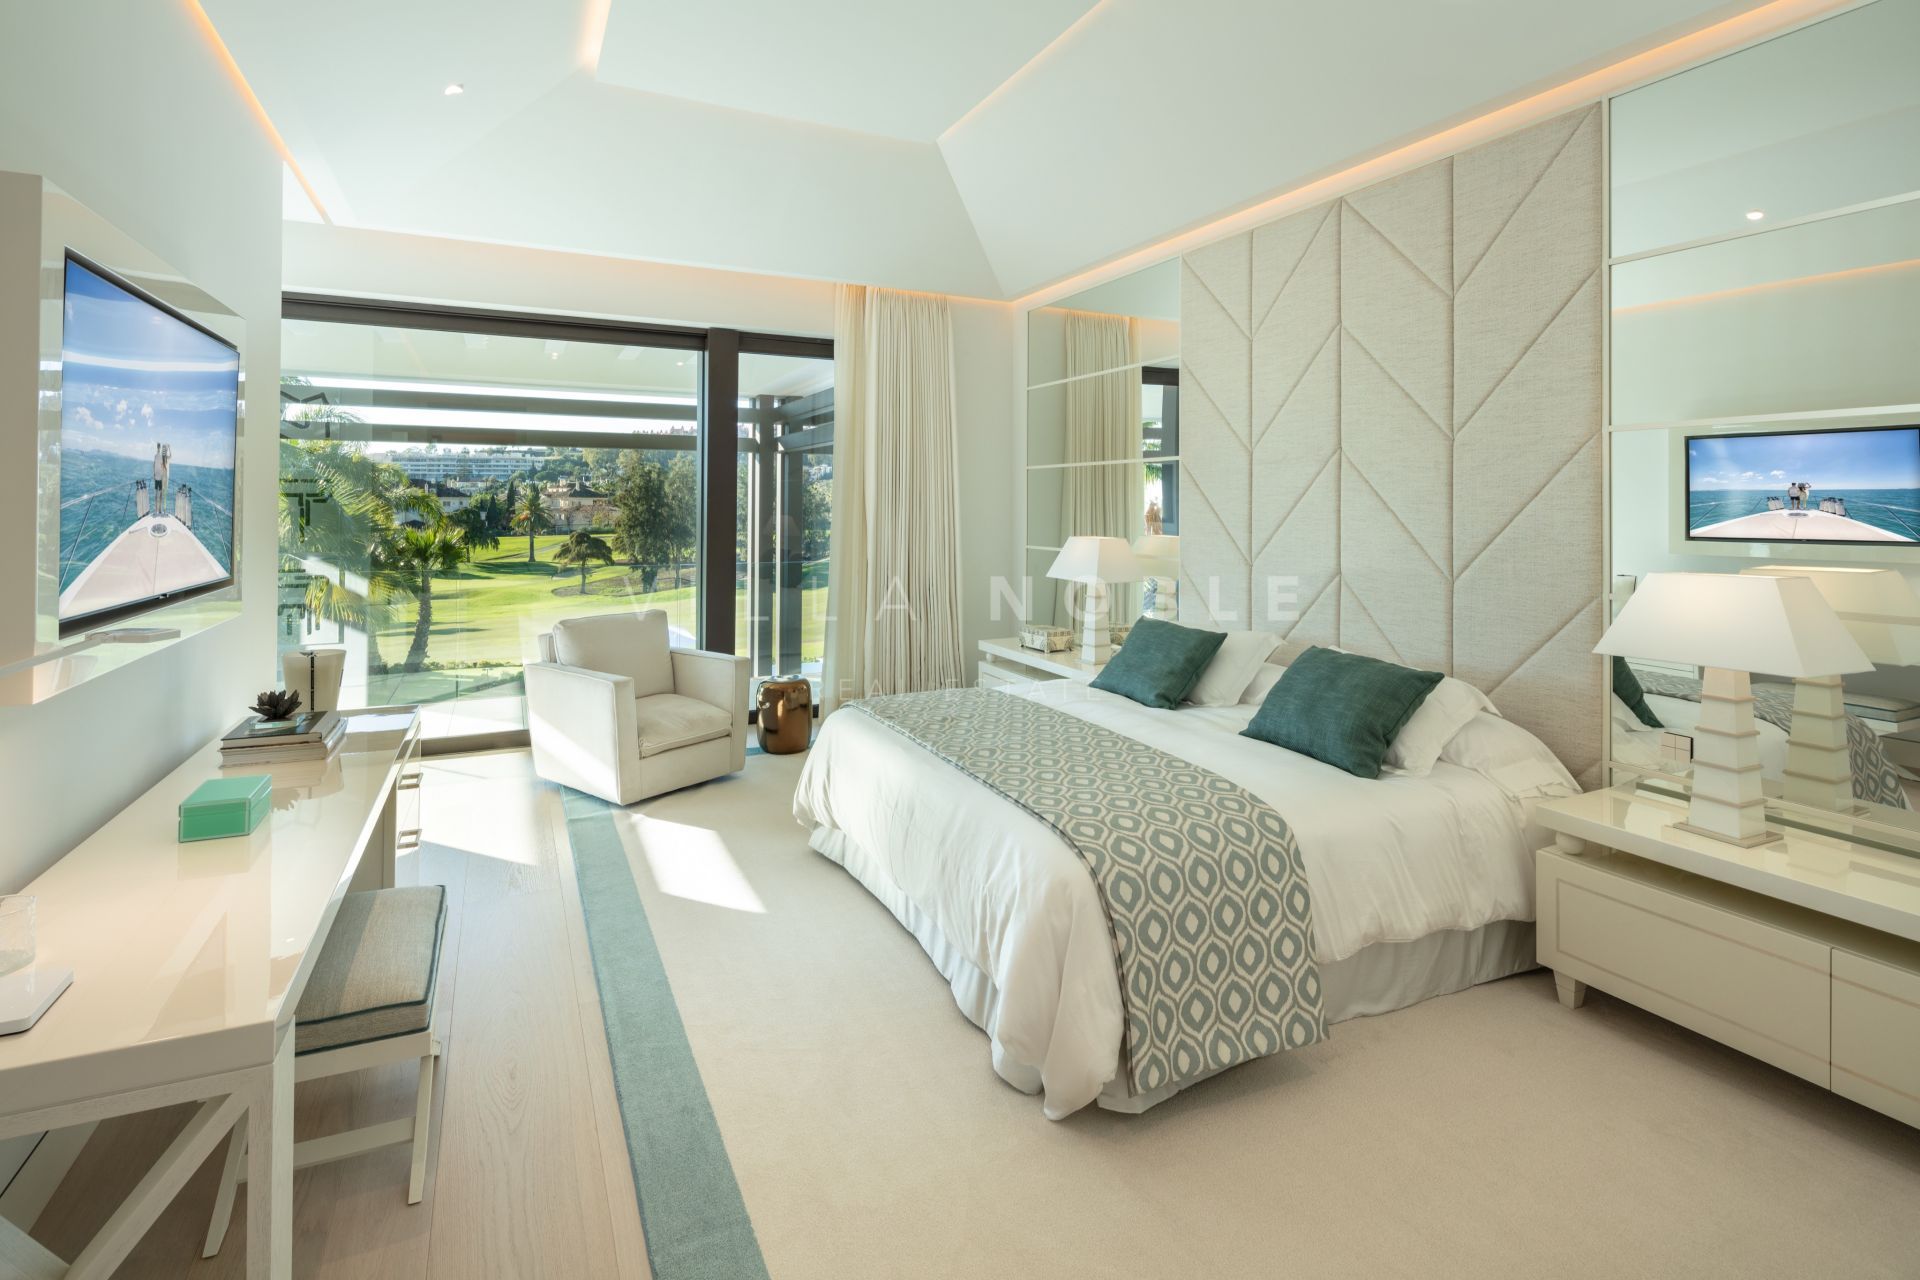 7 bedrooms villa in one of the most exclusive residential communities, La Cerquilla Marbella